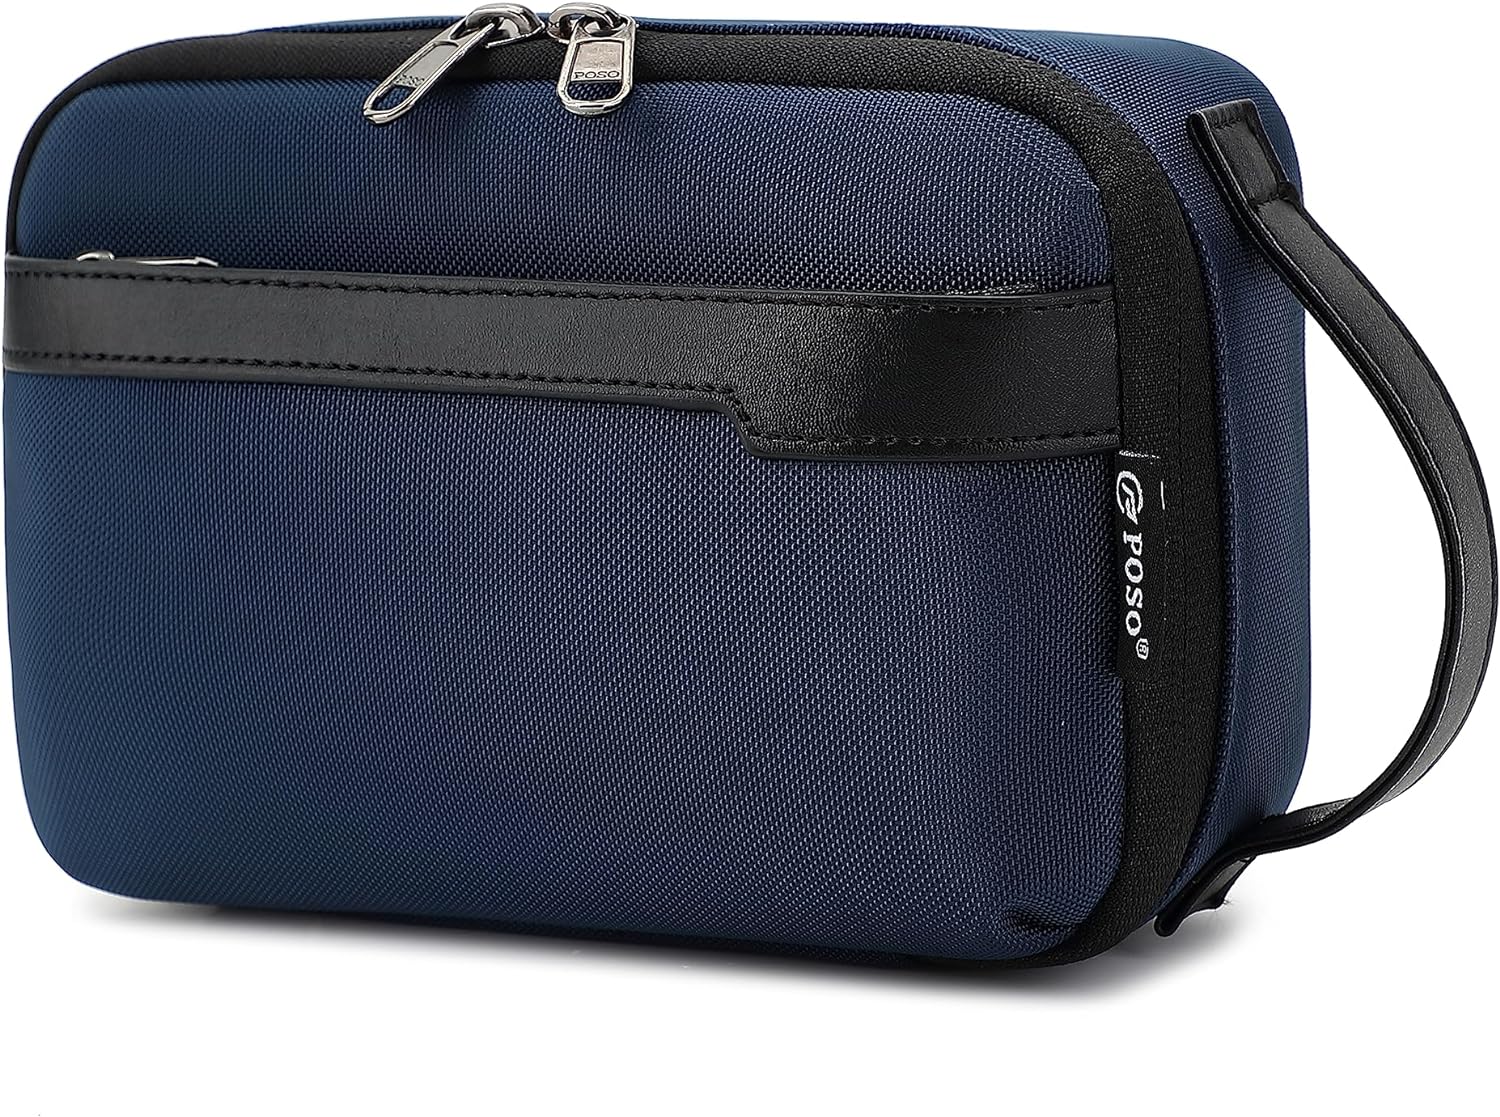 POSO Storage Small Bag (Blue)